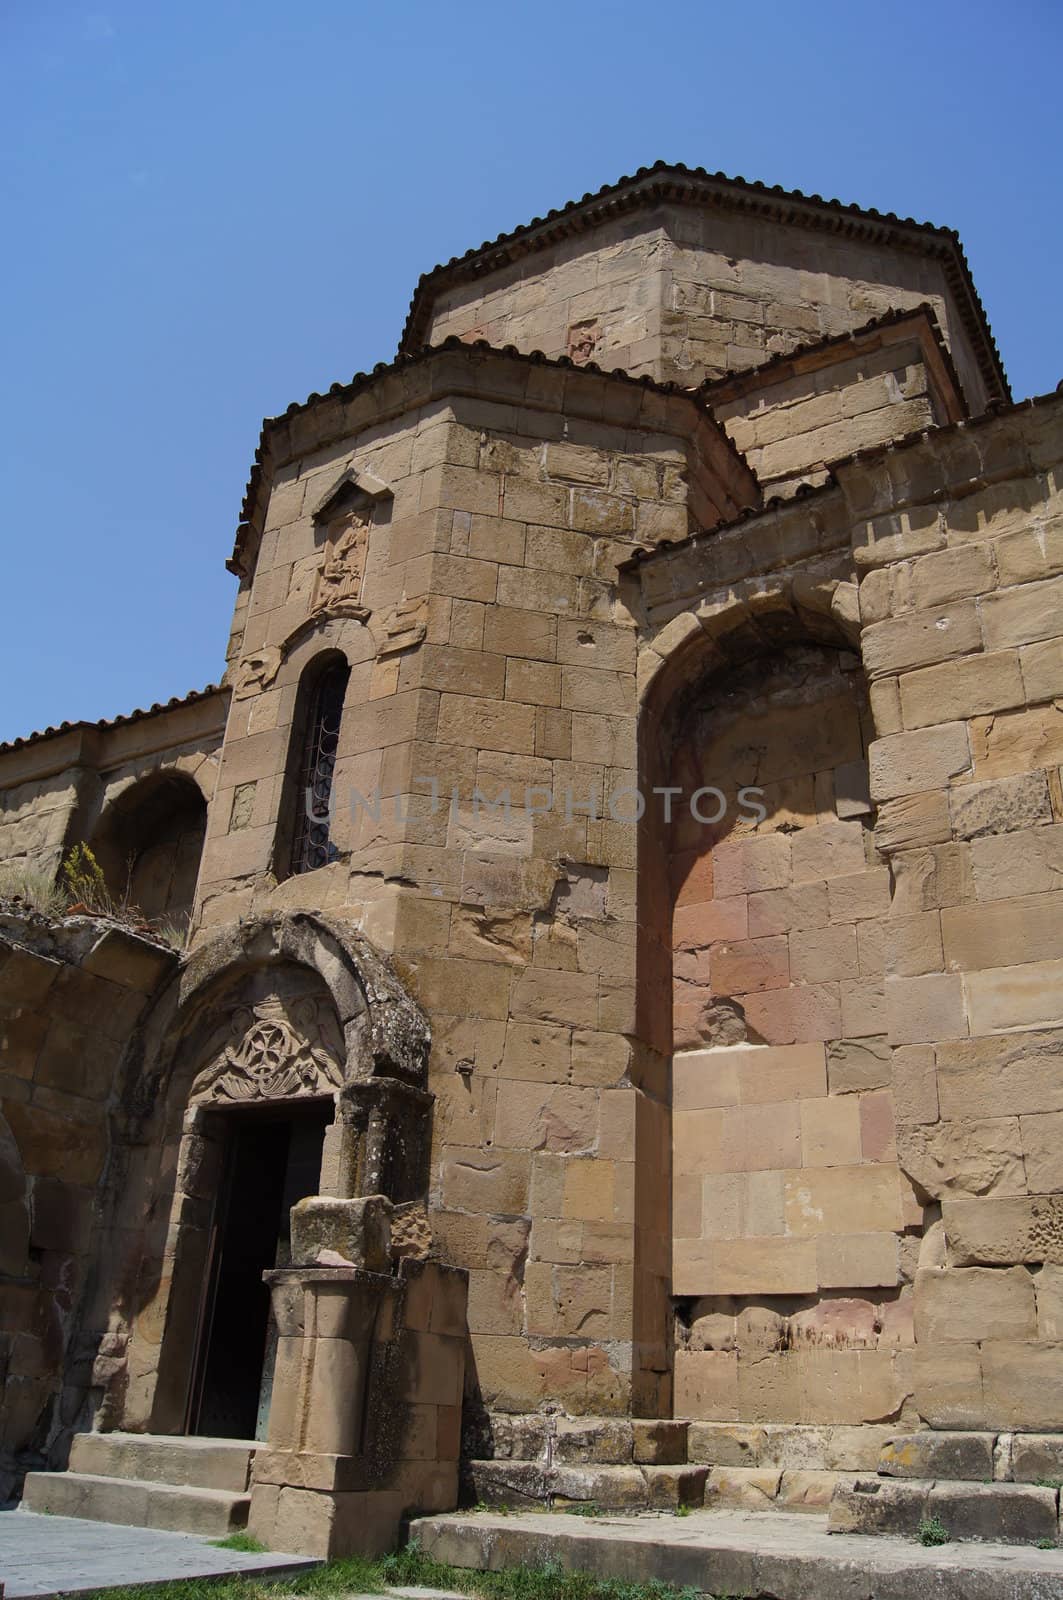 Exterior of ruins of Jvari, which is a Georgian Orthodox monastery of the 6th century near Mtskheta (World Heritage site) - the most famous symbol of georgiam christianityDjvari monastery